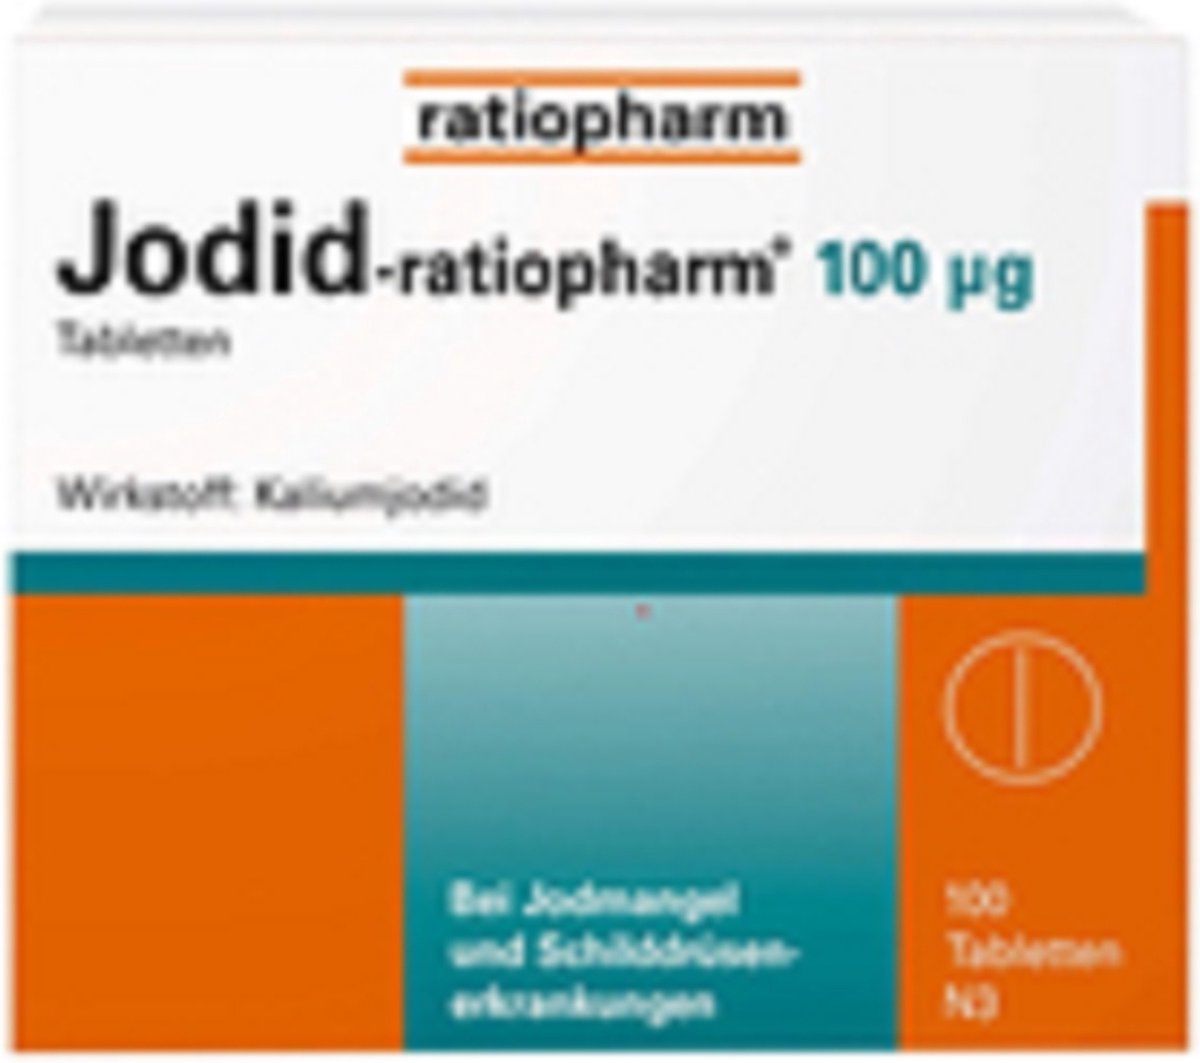 Jodid-ratiopharm 100 μg tabletten, 100 stuks | jodium tabletten | jodium - Ratiopharm